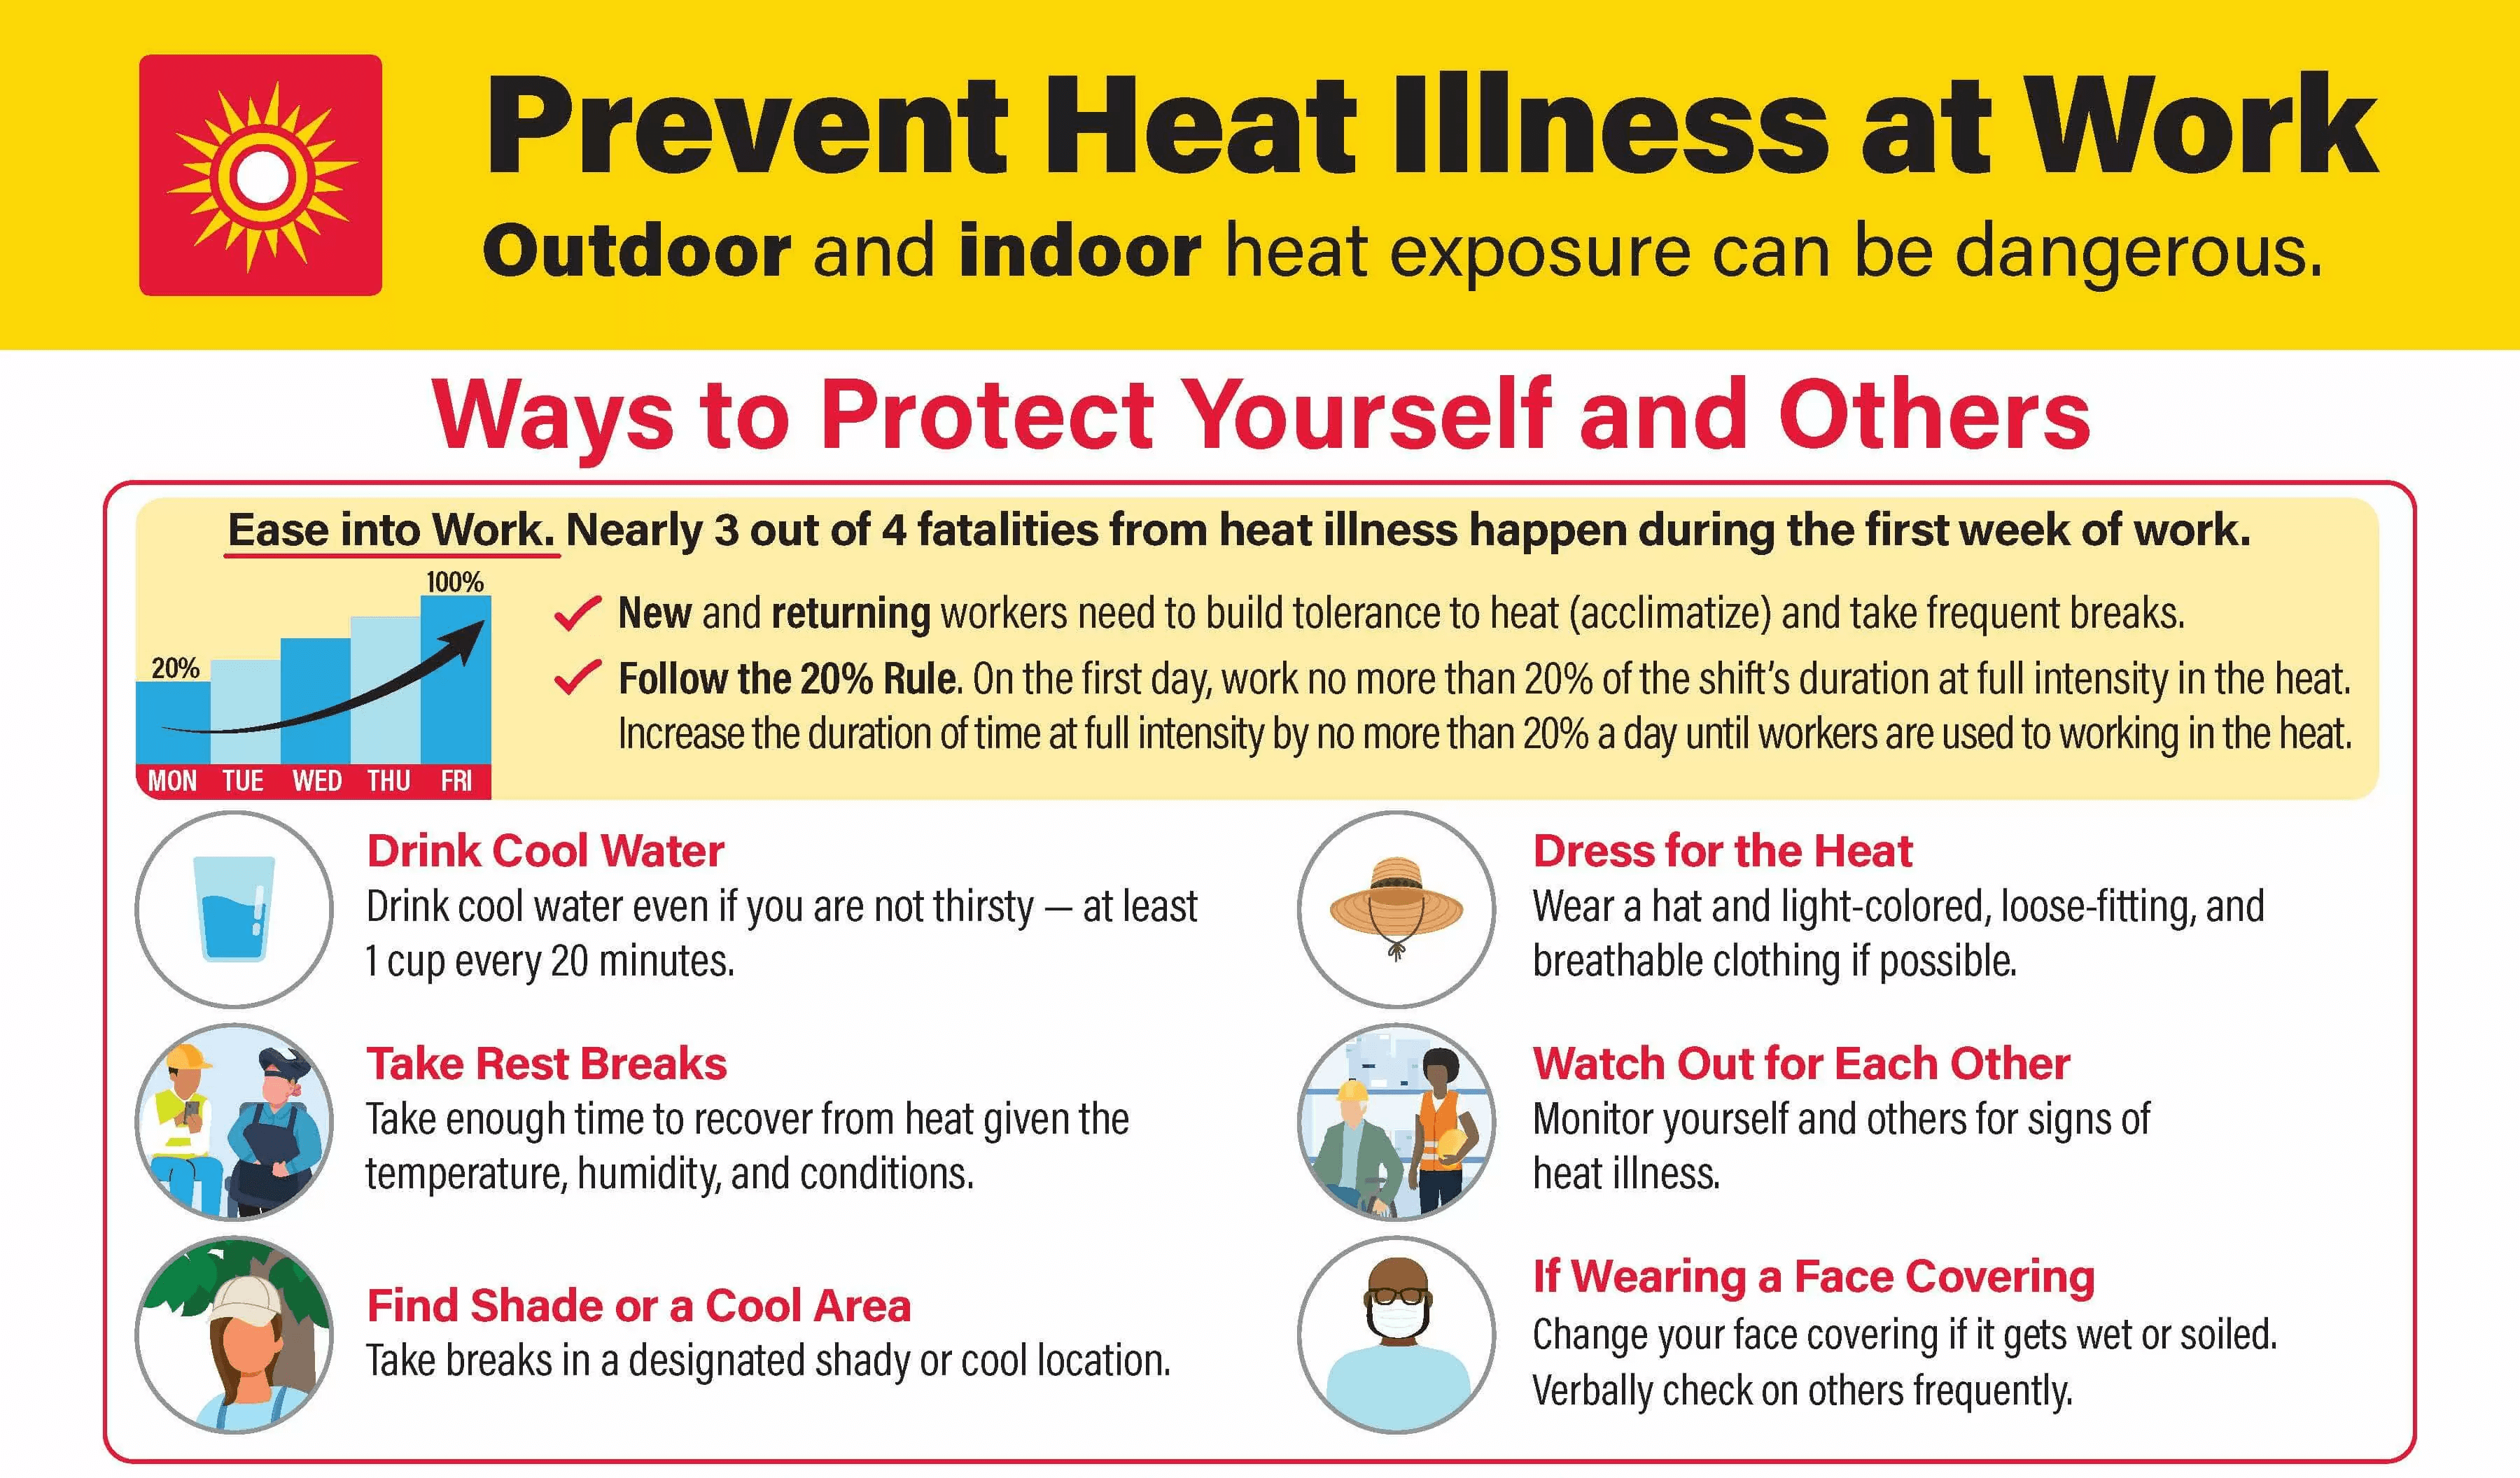 OSHA'a Prevent Heat Illness at Work